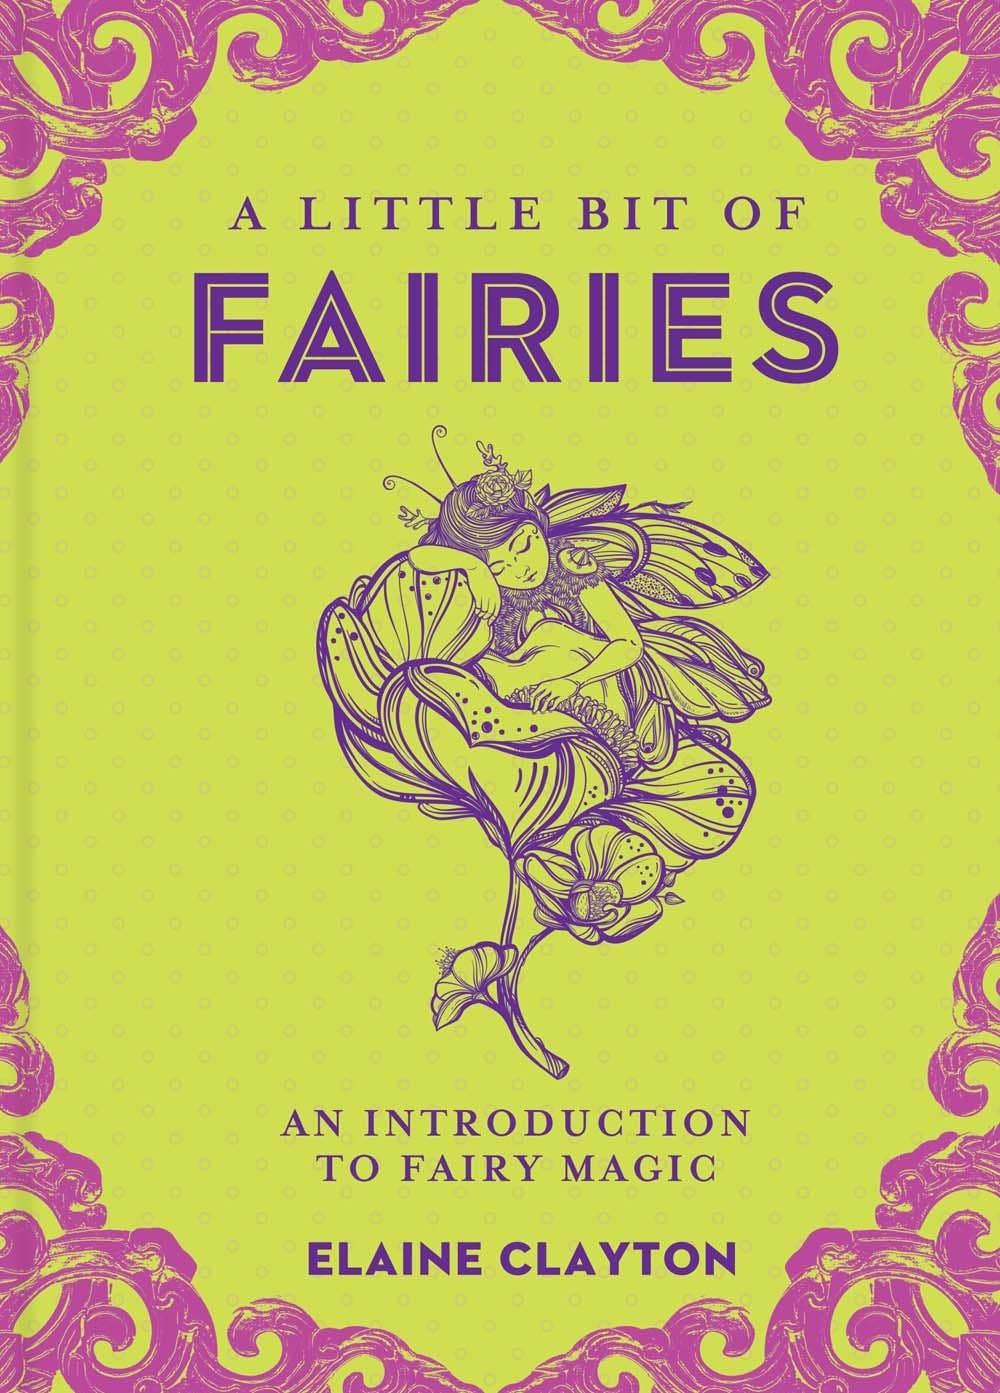 A Little Bit of Fairies by Elaine Clayton - Spiral Circle